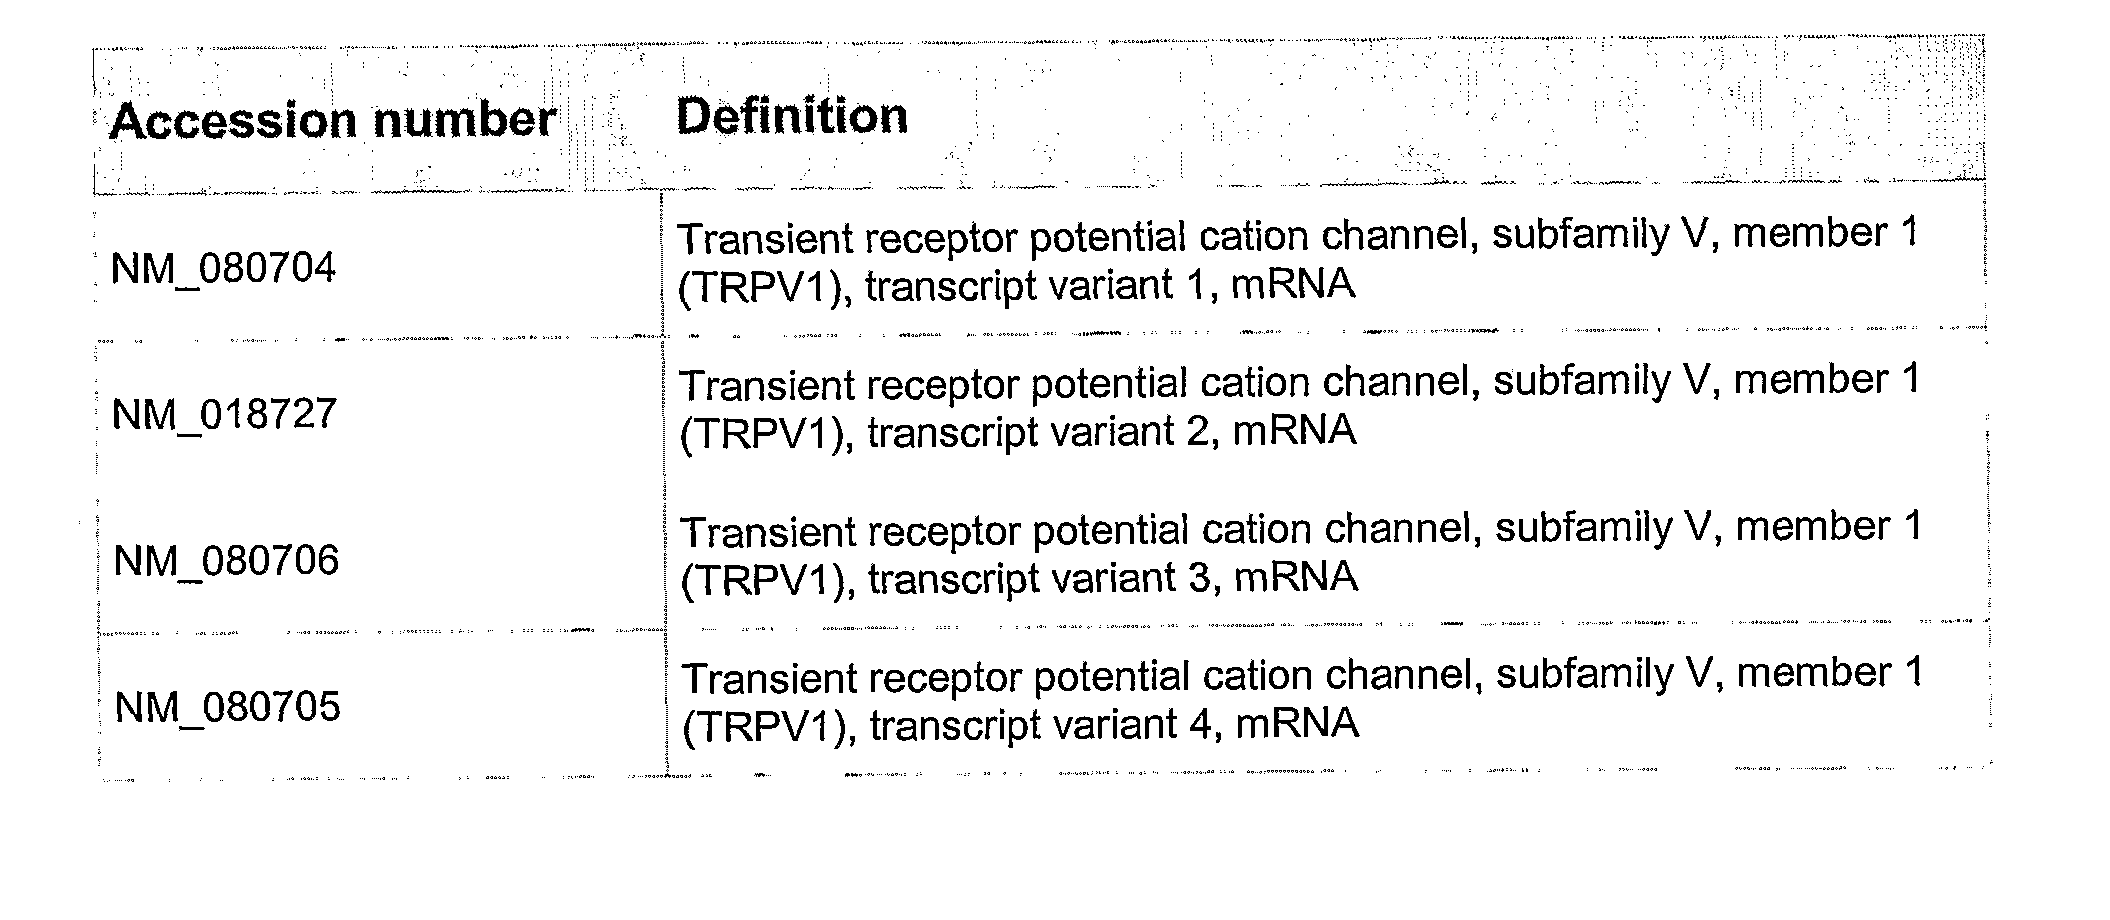 Modulation of TRPV expression levels